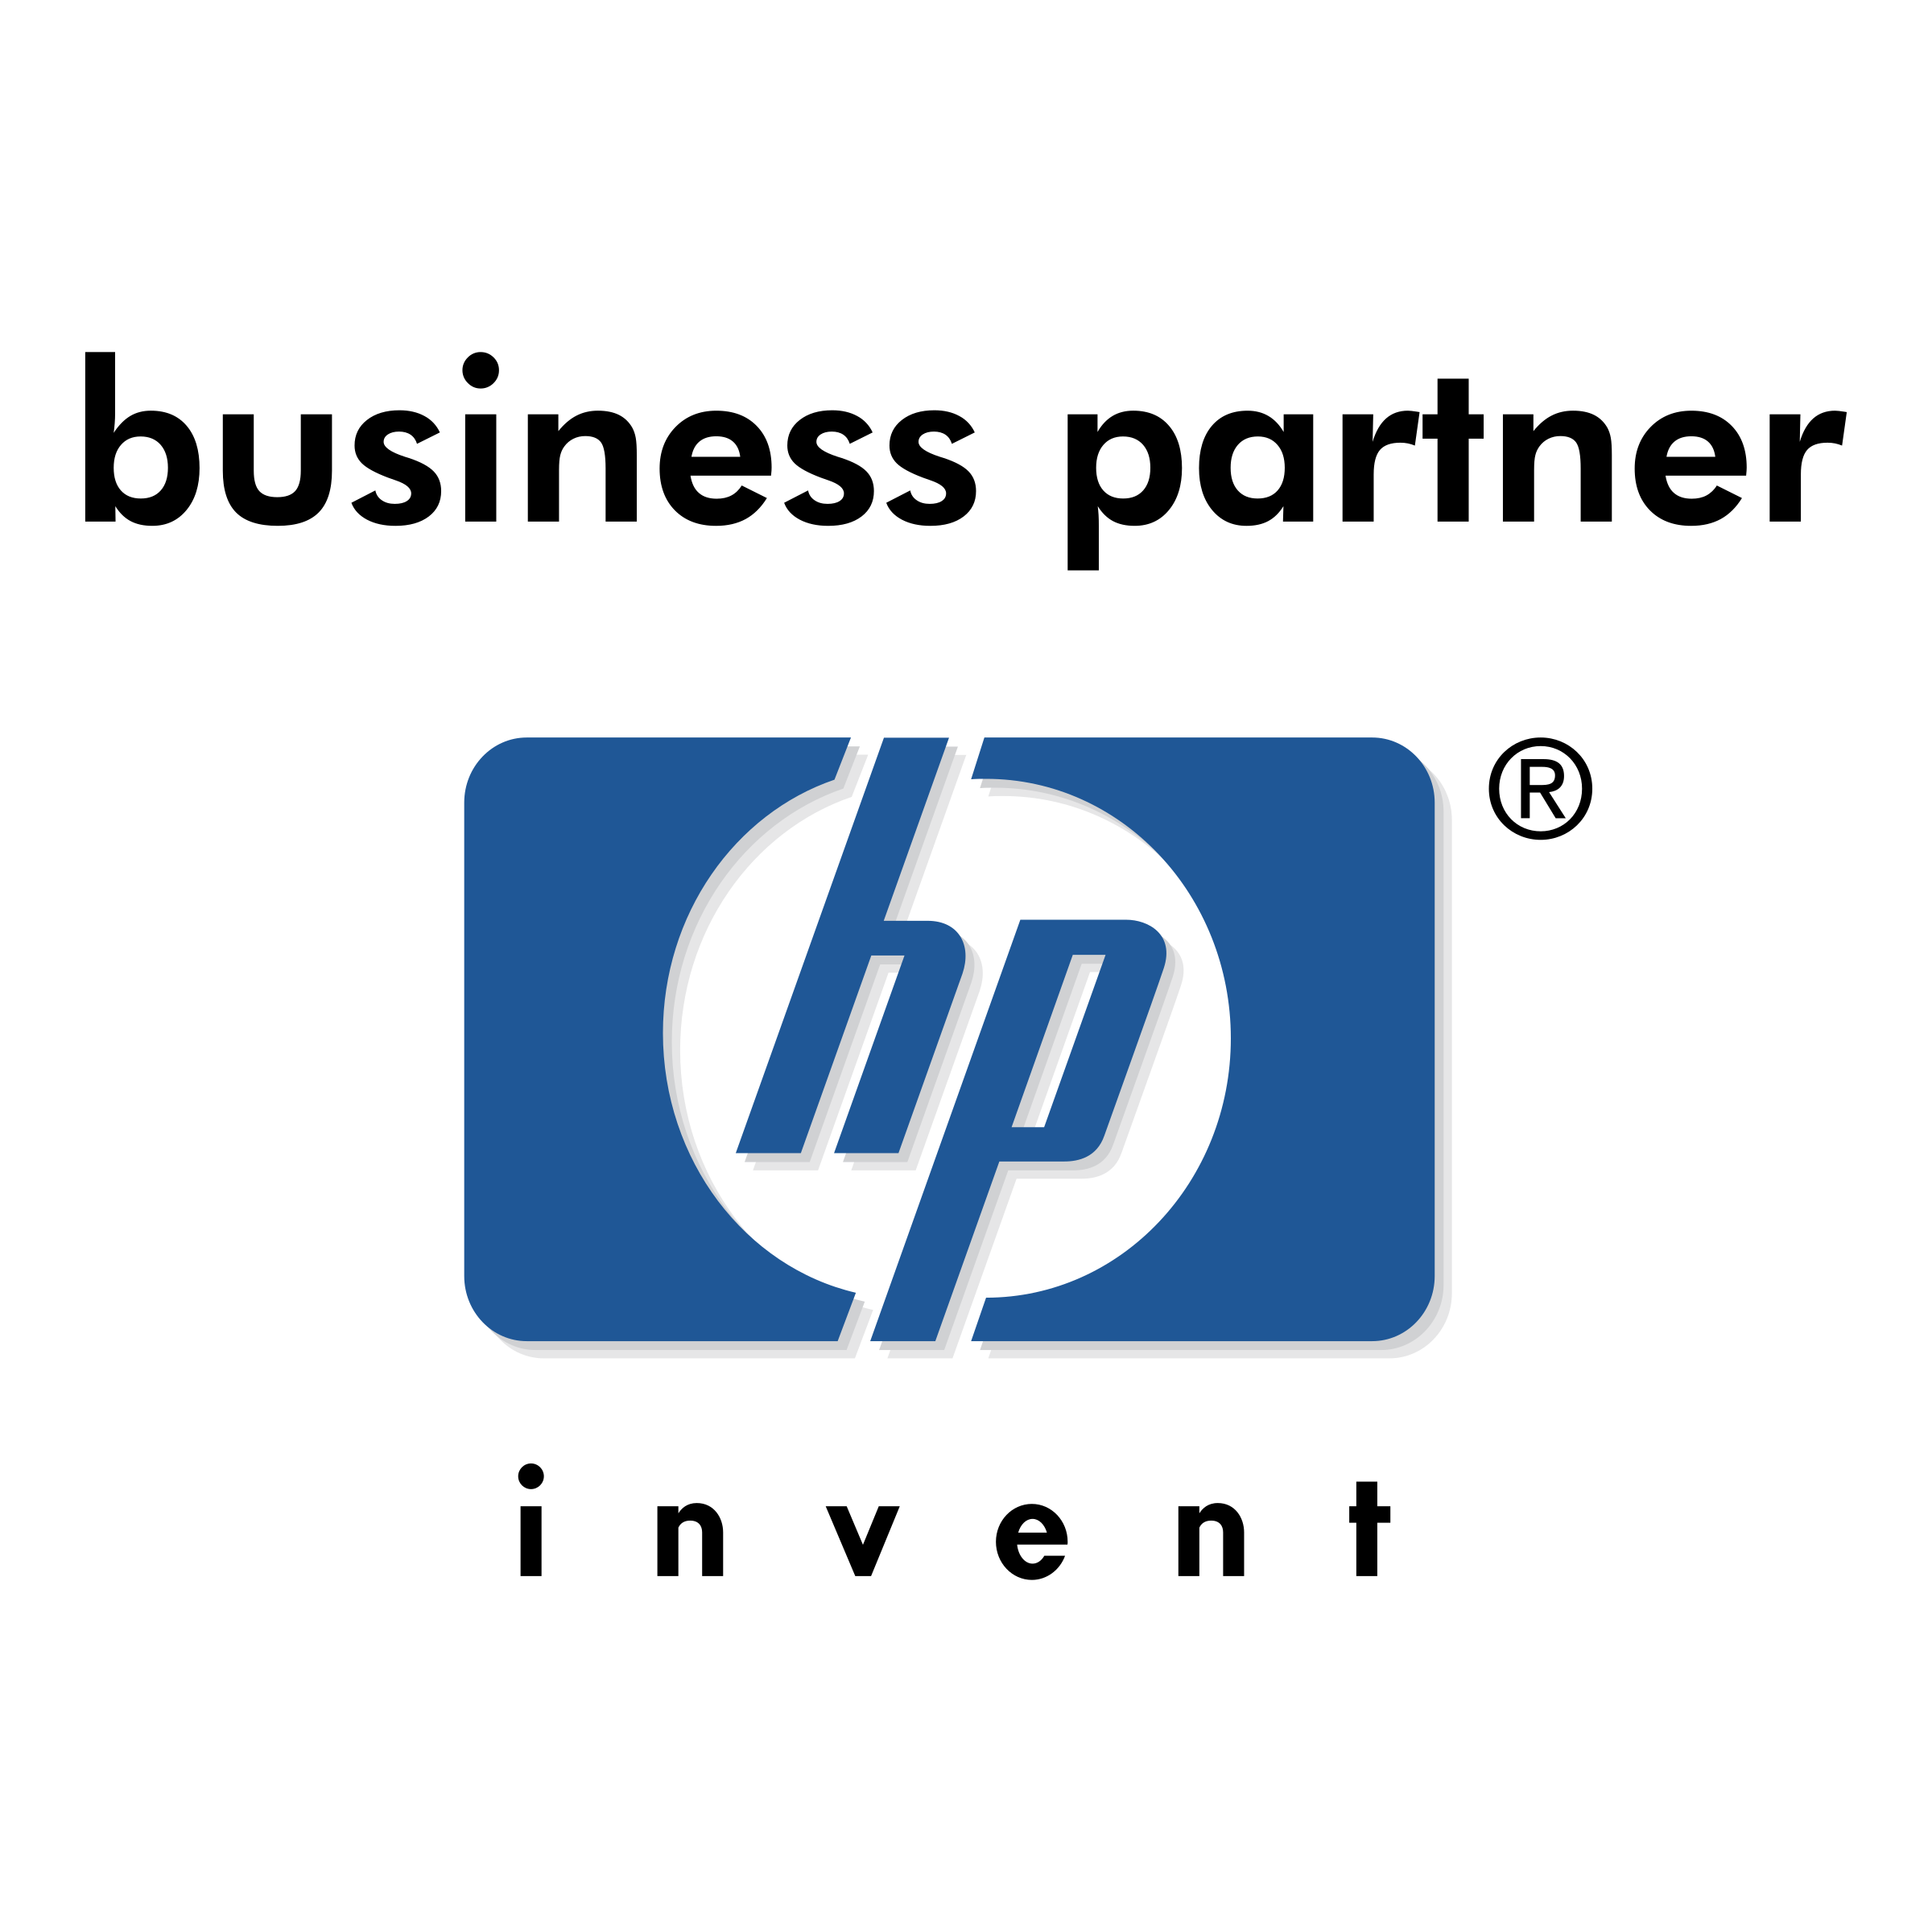 Logo Hewlett-Packard Download Free Image PNG Image